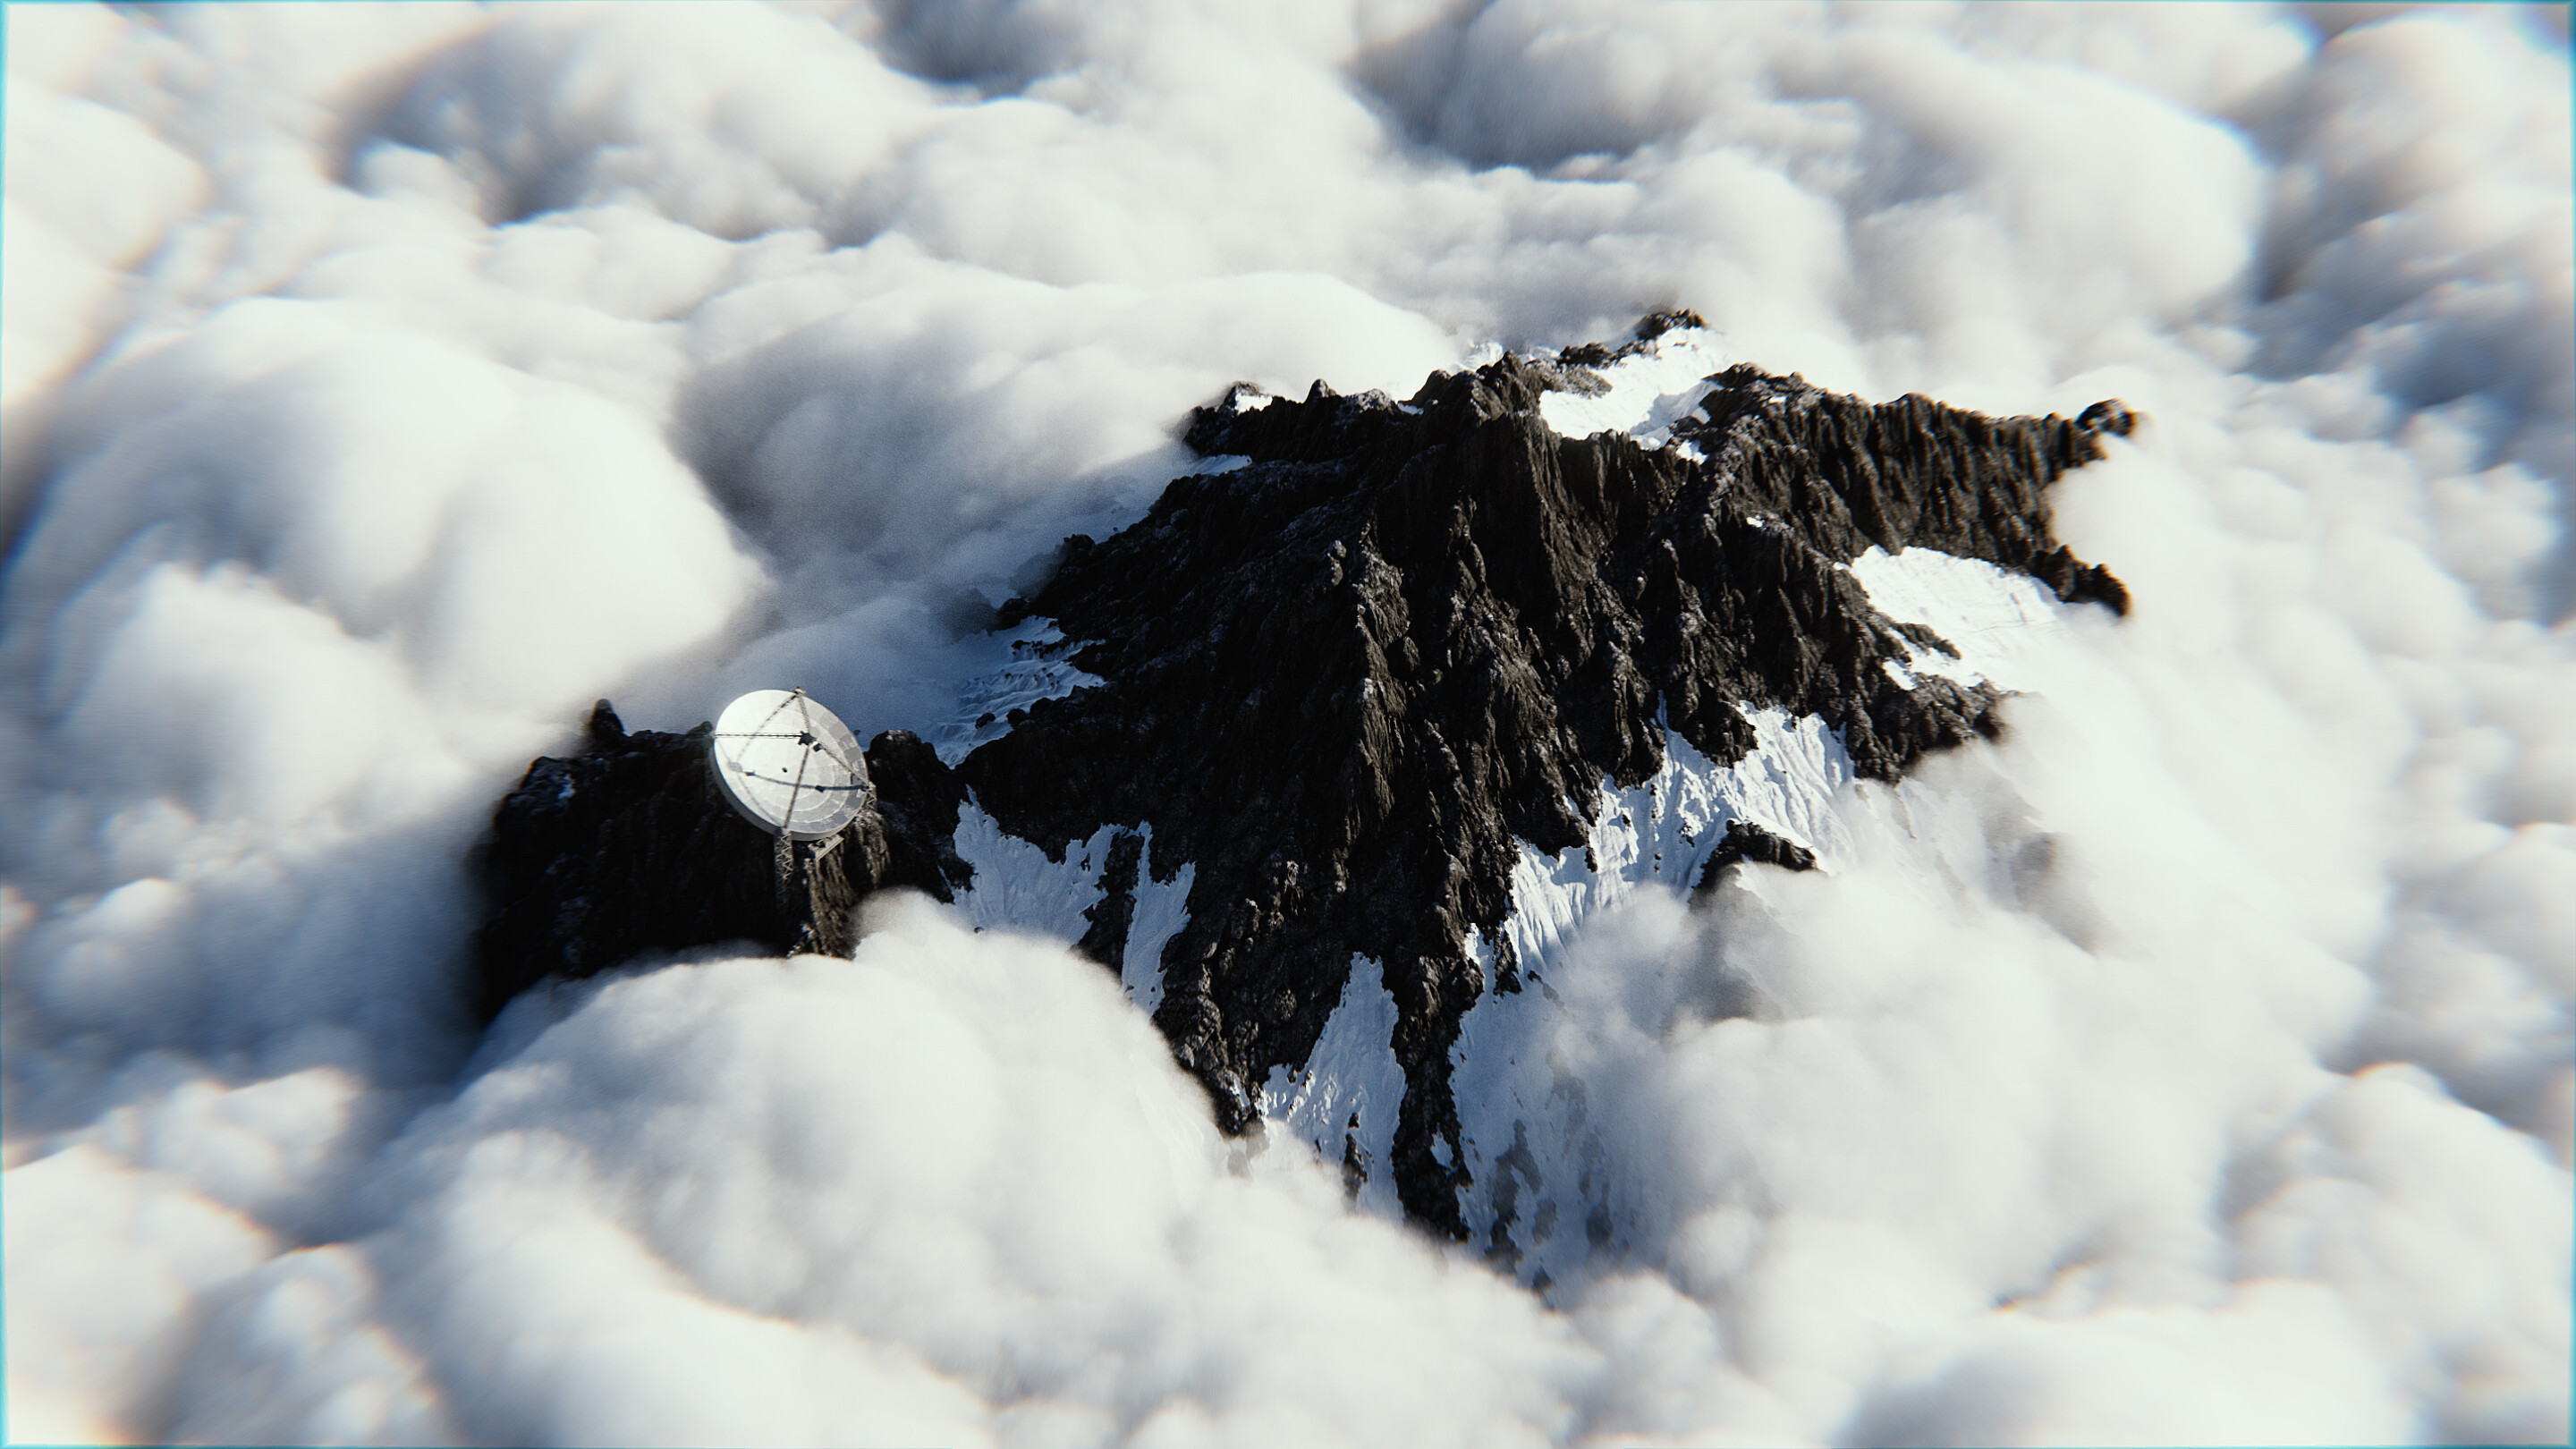 General 2880x1620 mountain top clouds CGI mountains snow digital art satellite dish